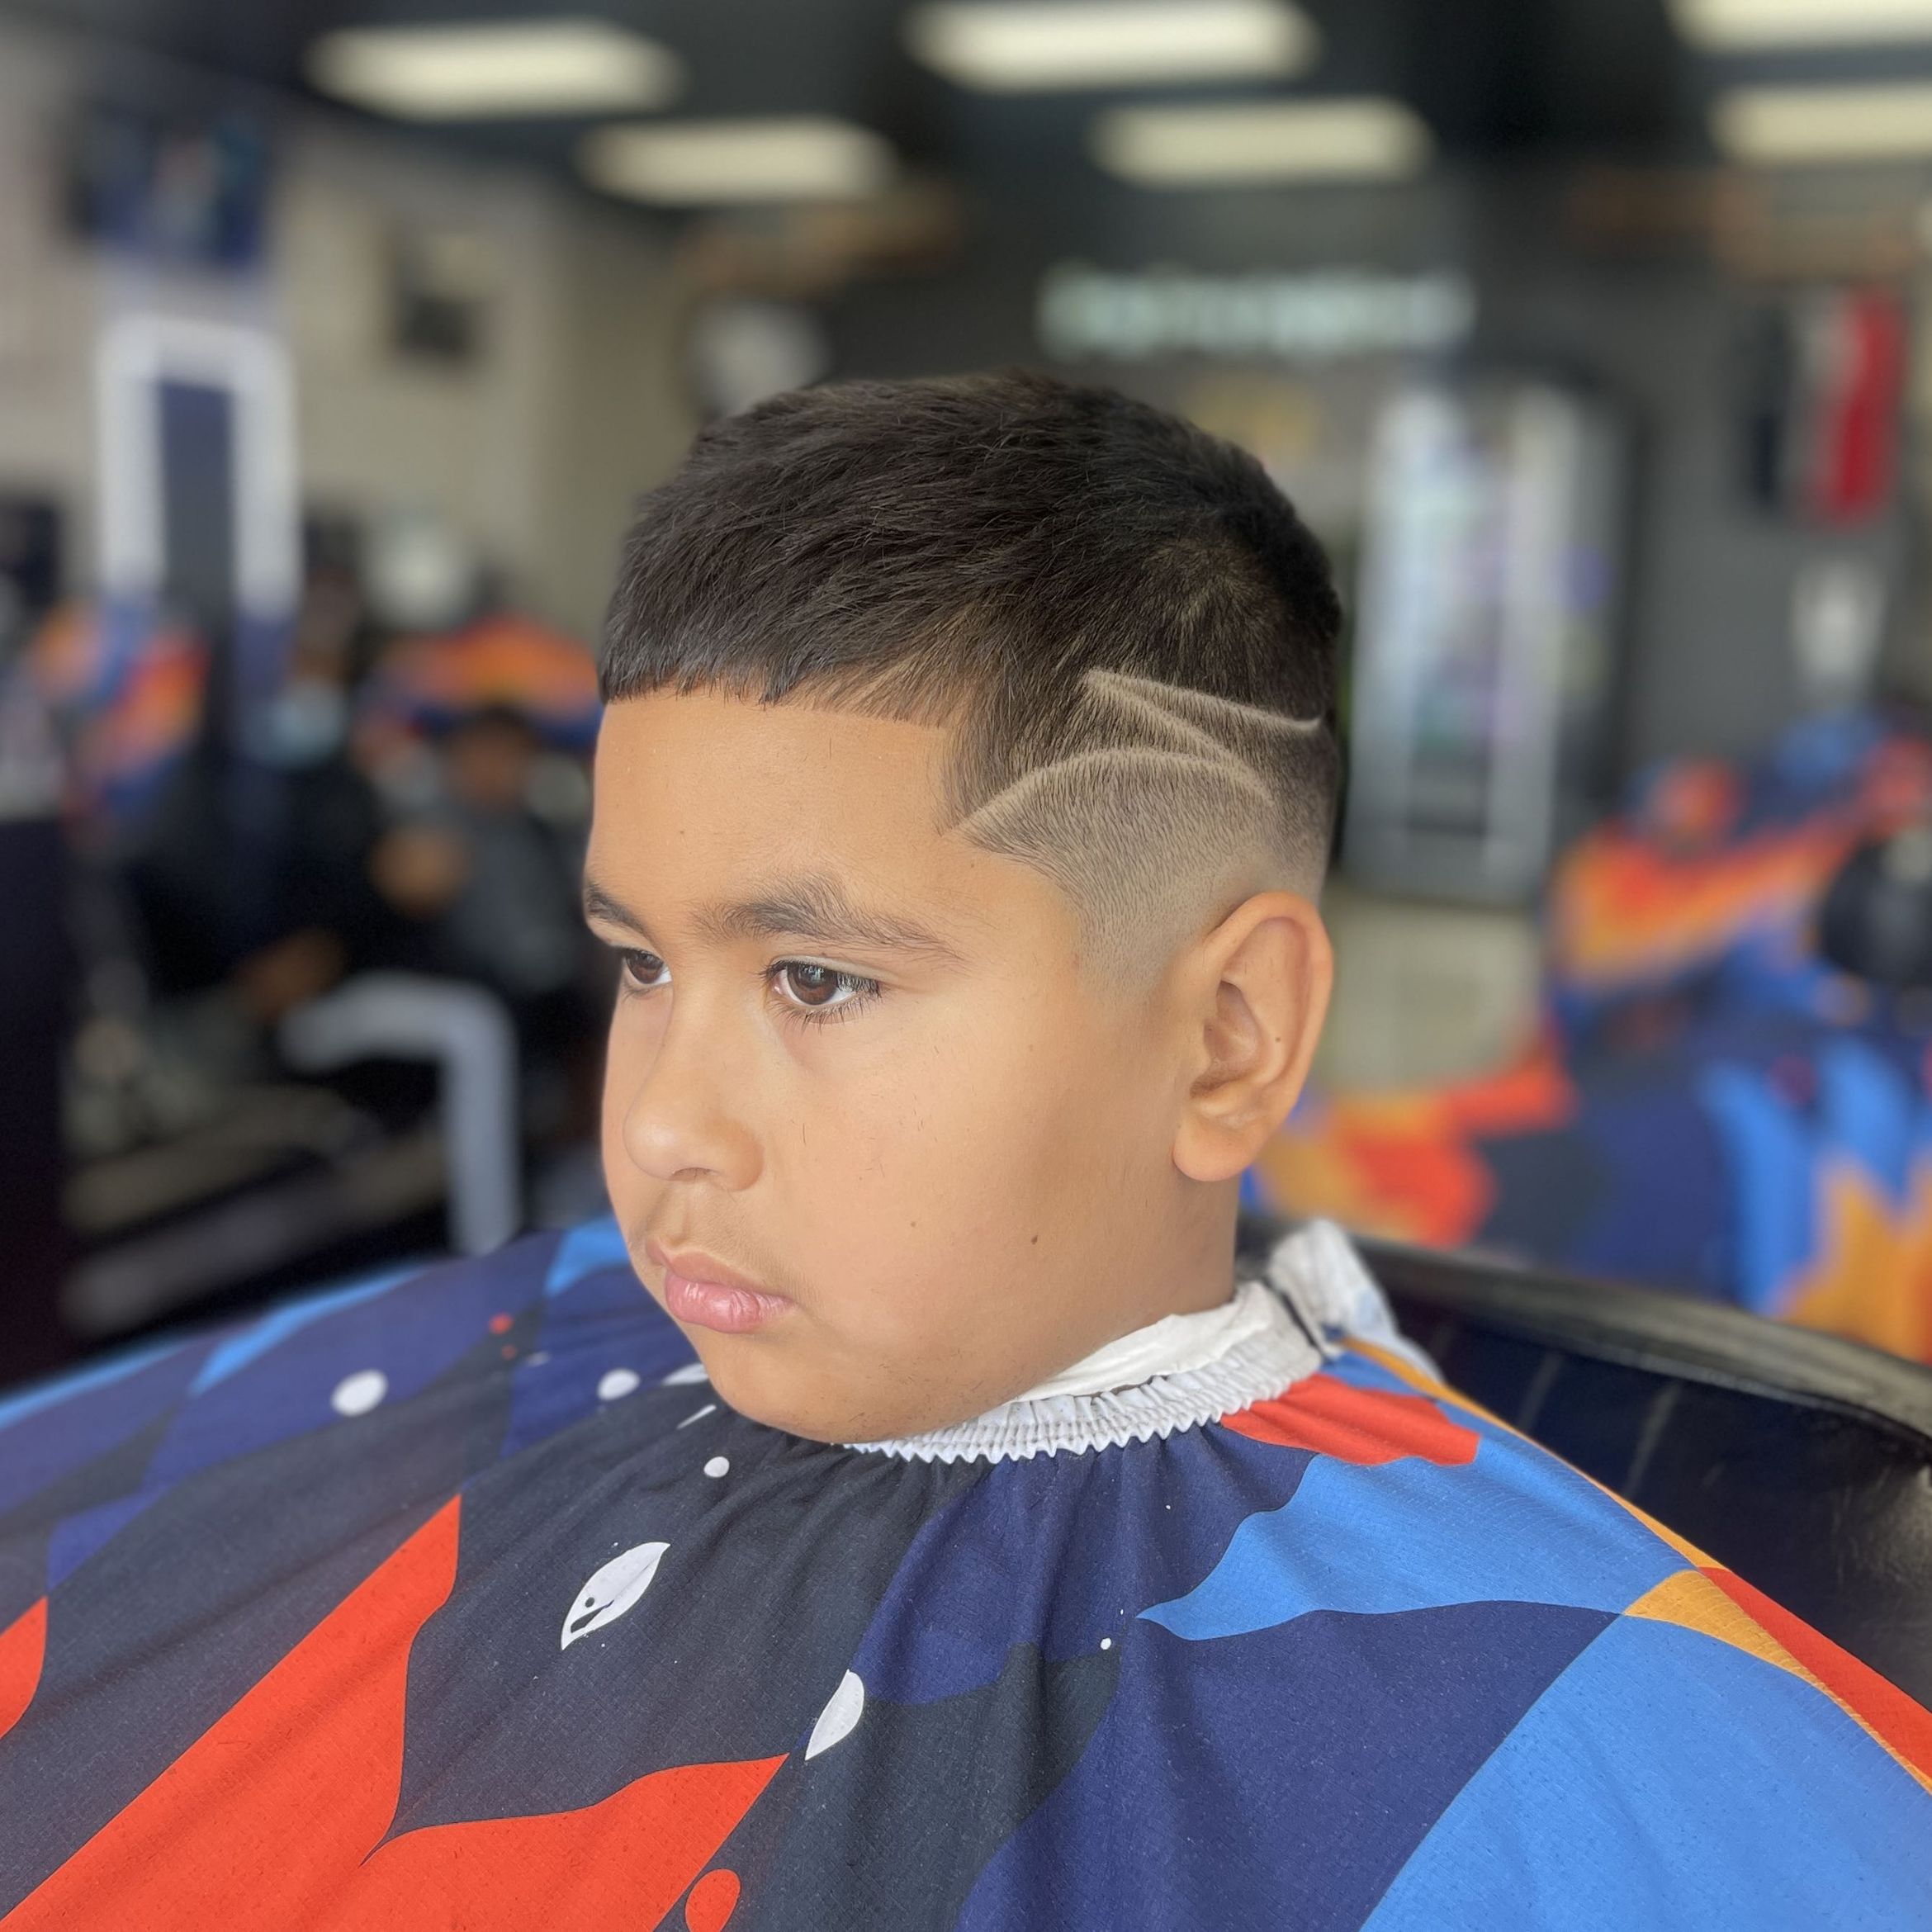 Kid haircut (12 and under) portfolio